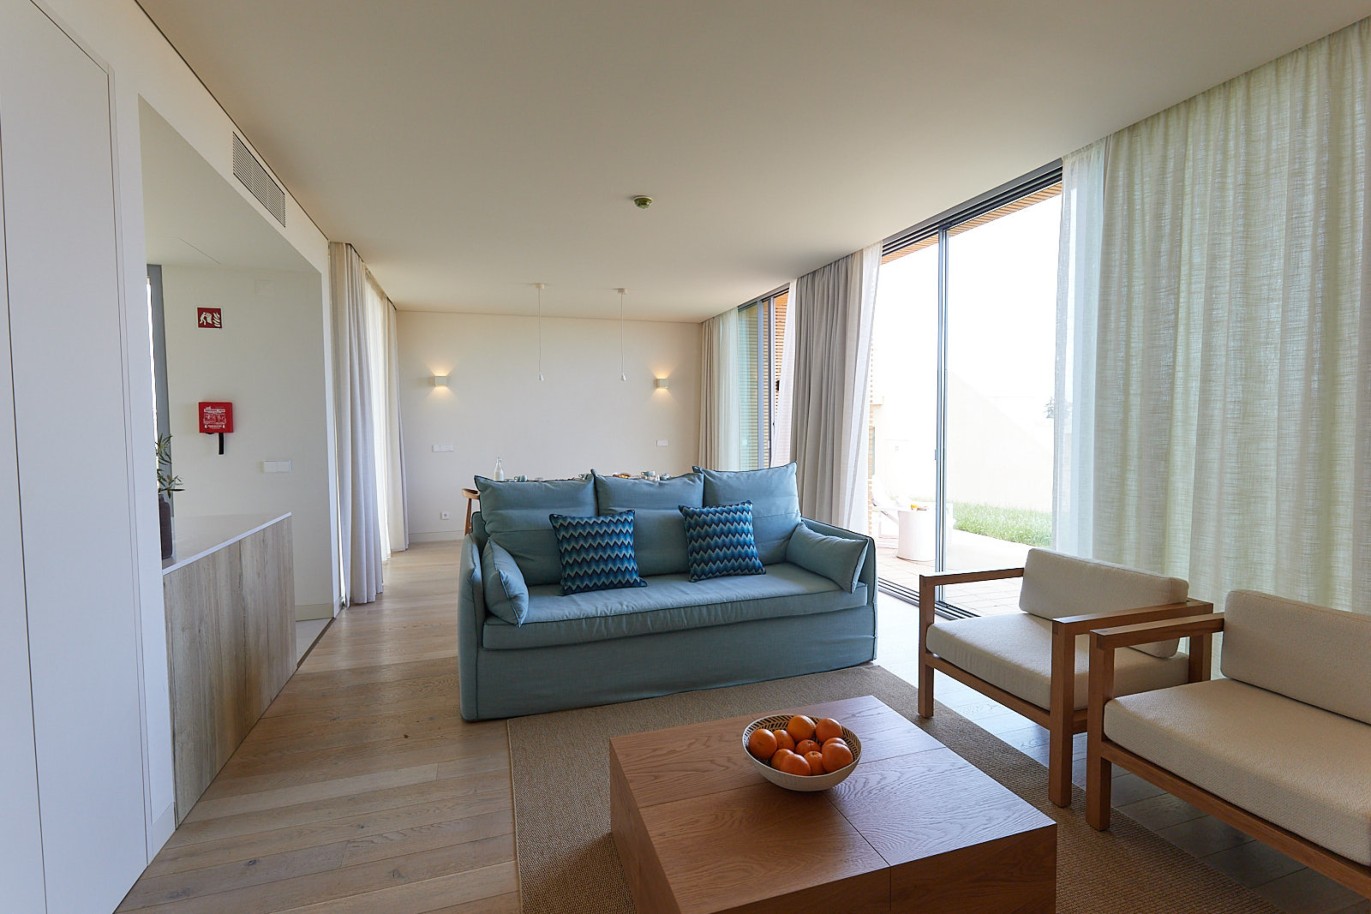 2 bedroom apartment in resort, for sale in Porches, Algarve_229101